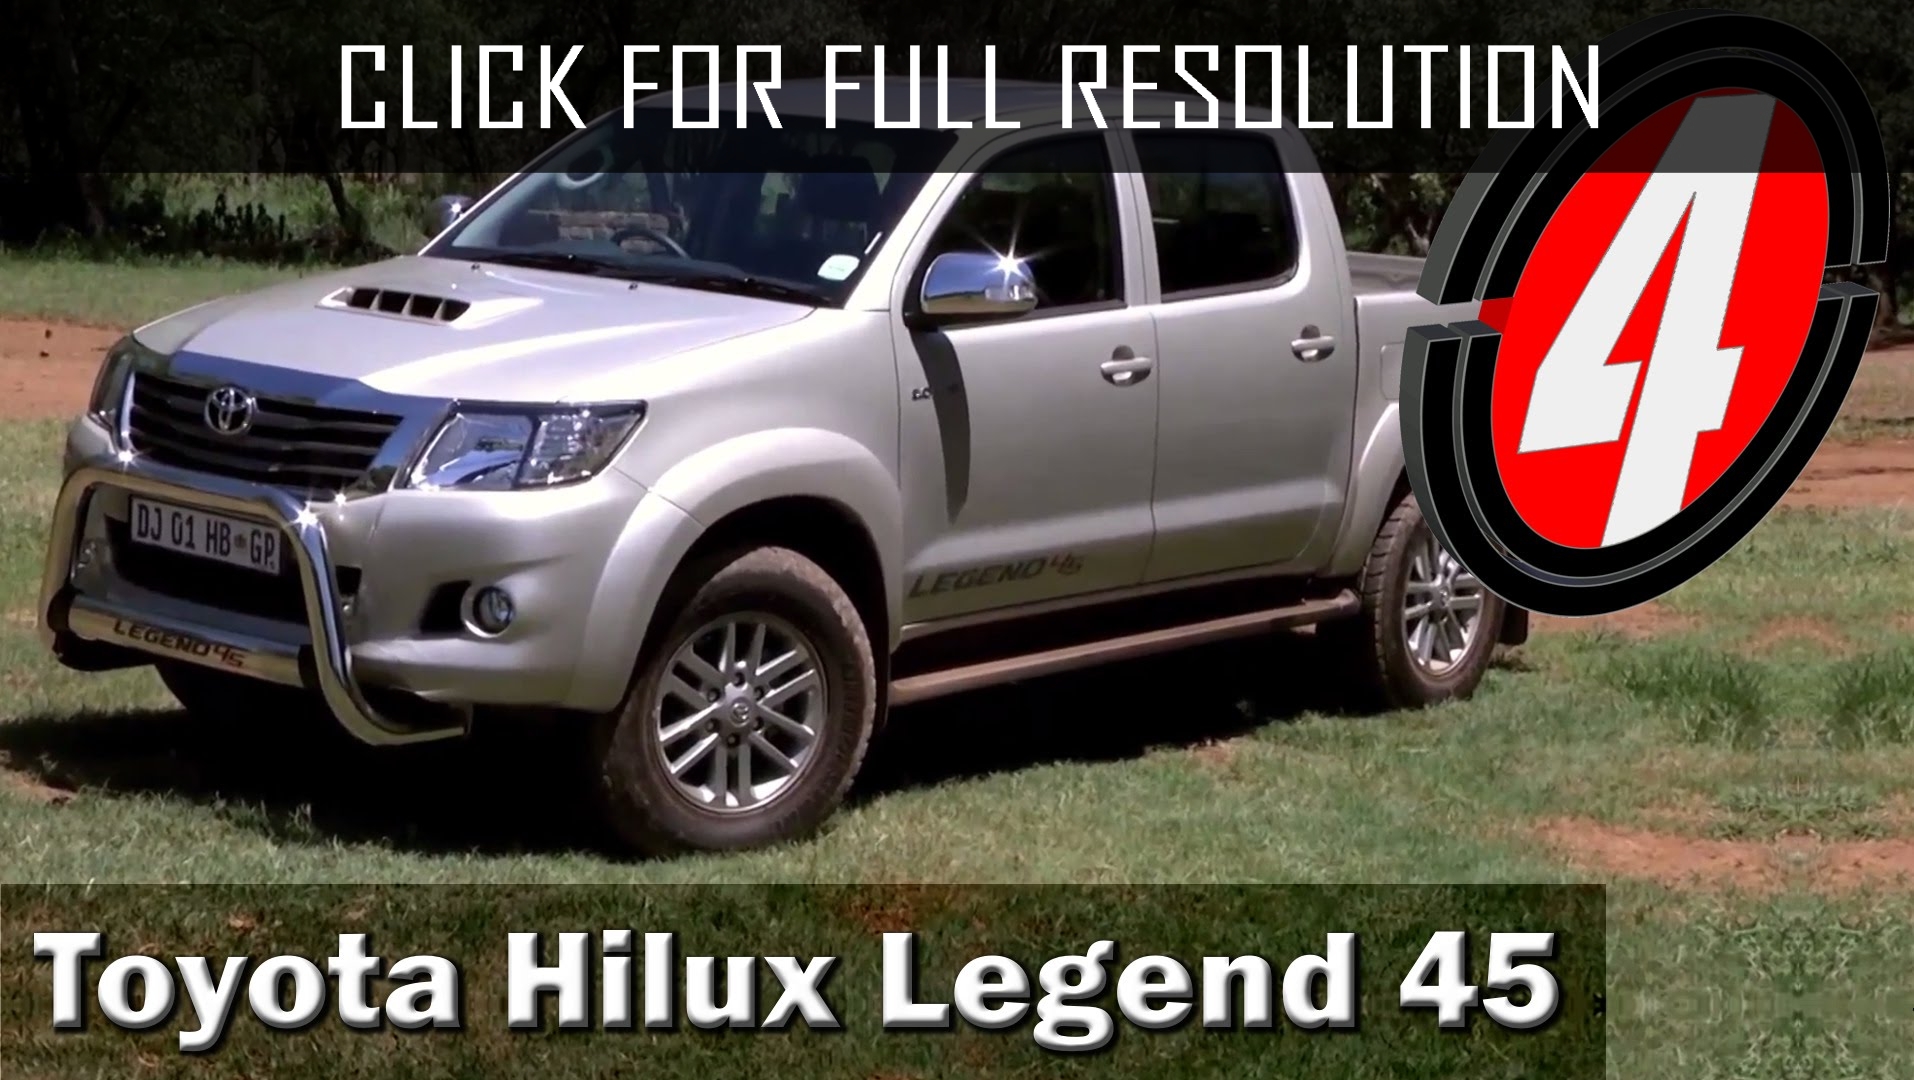 Toyota Hilux Legend 45